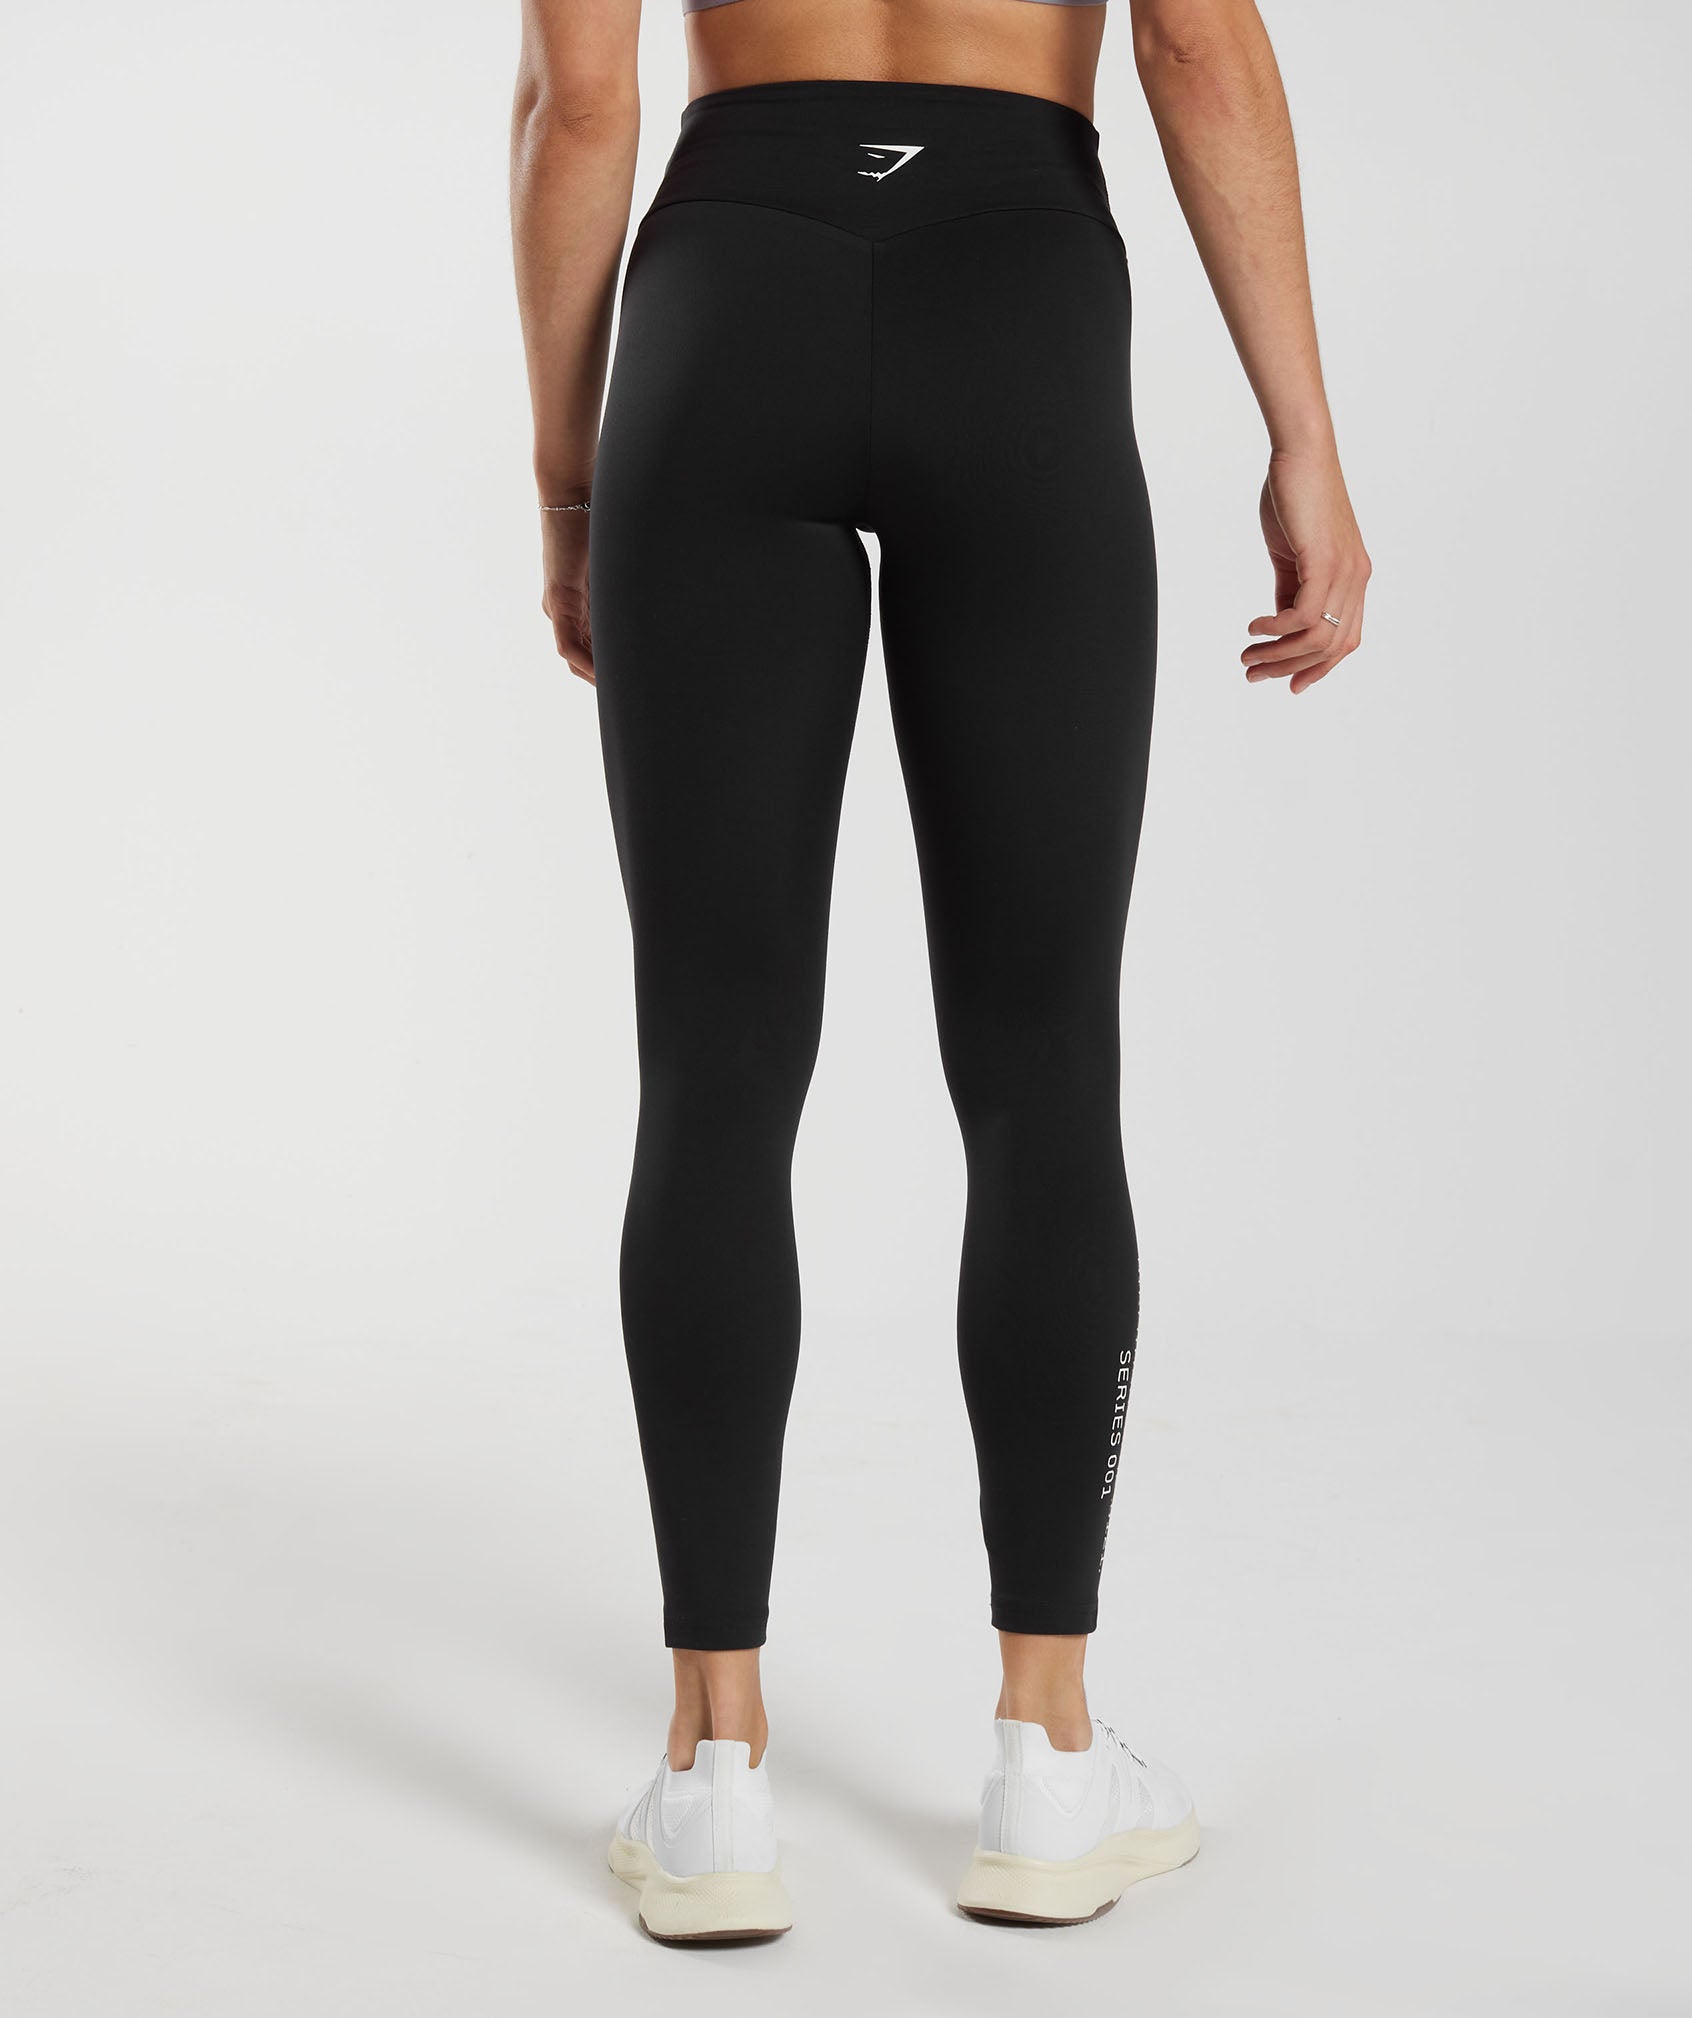 Gymshark Black Training Graphic Leggings Size XS - $35 (22% Off